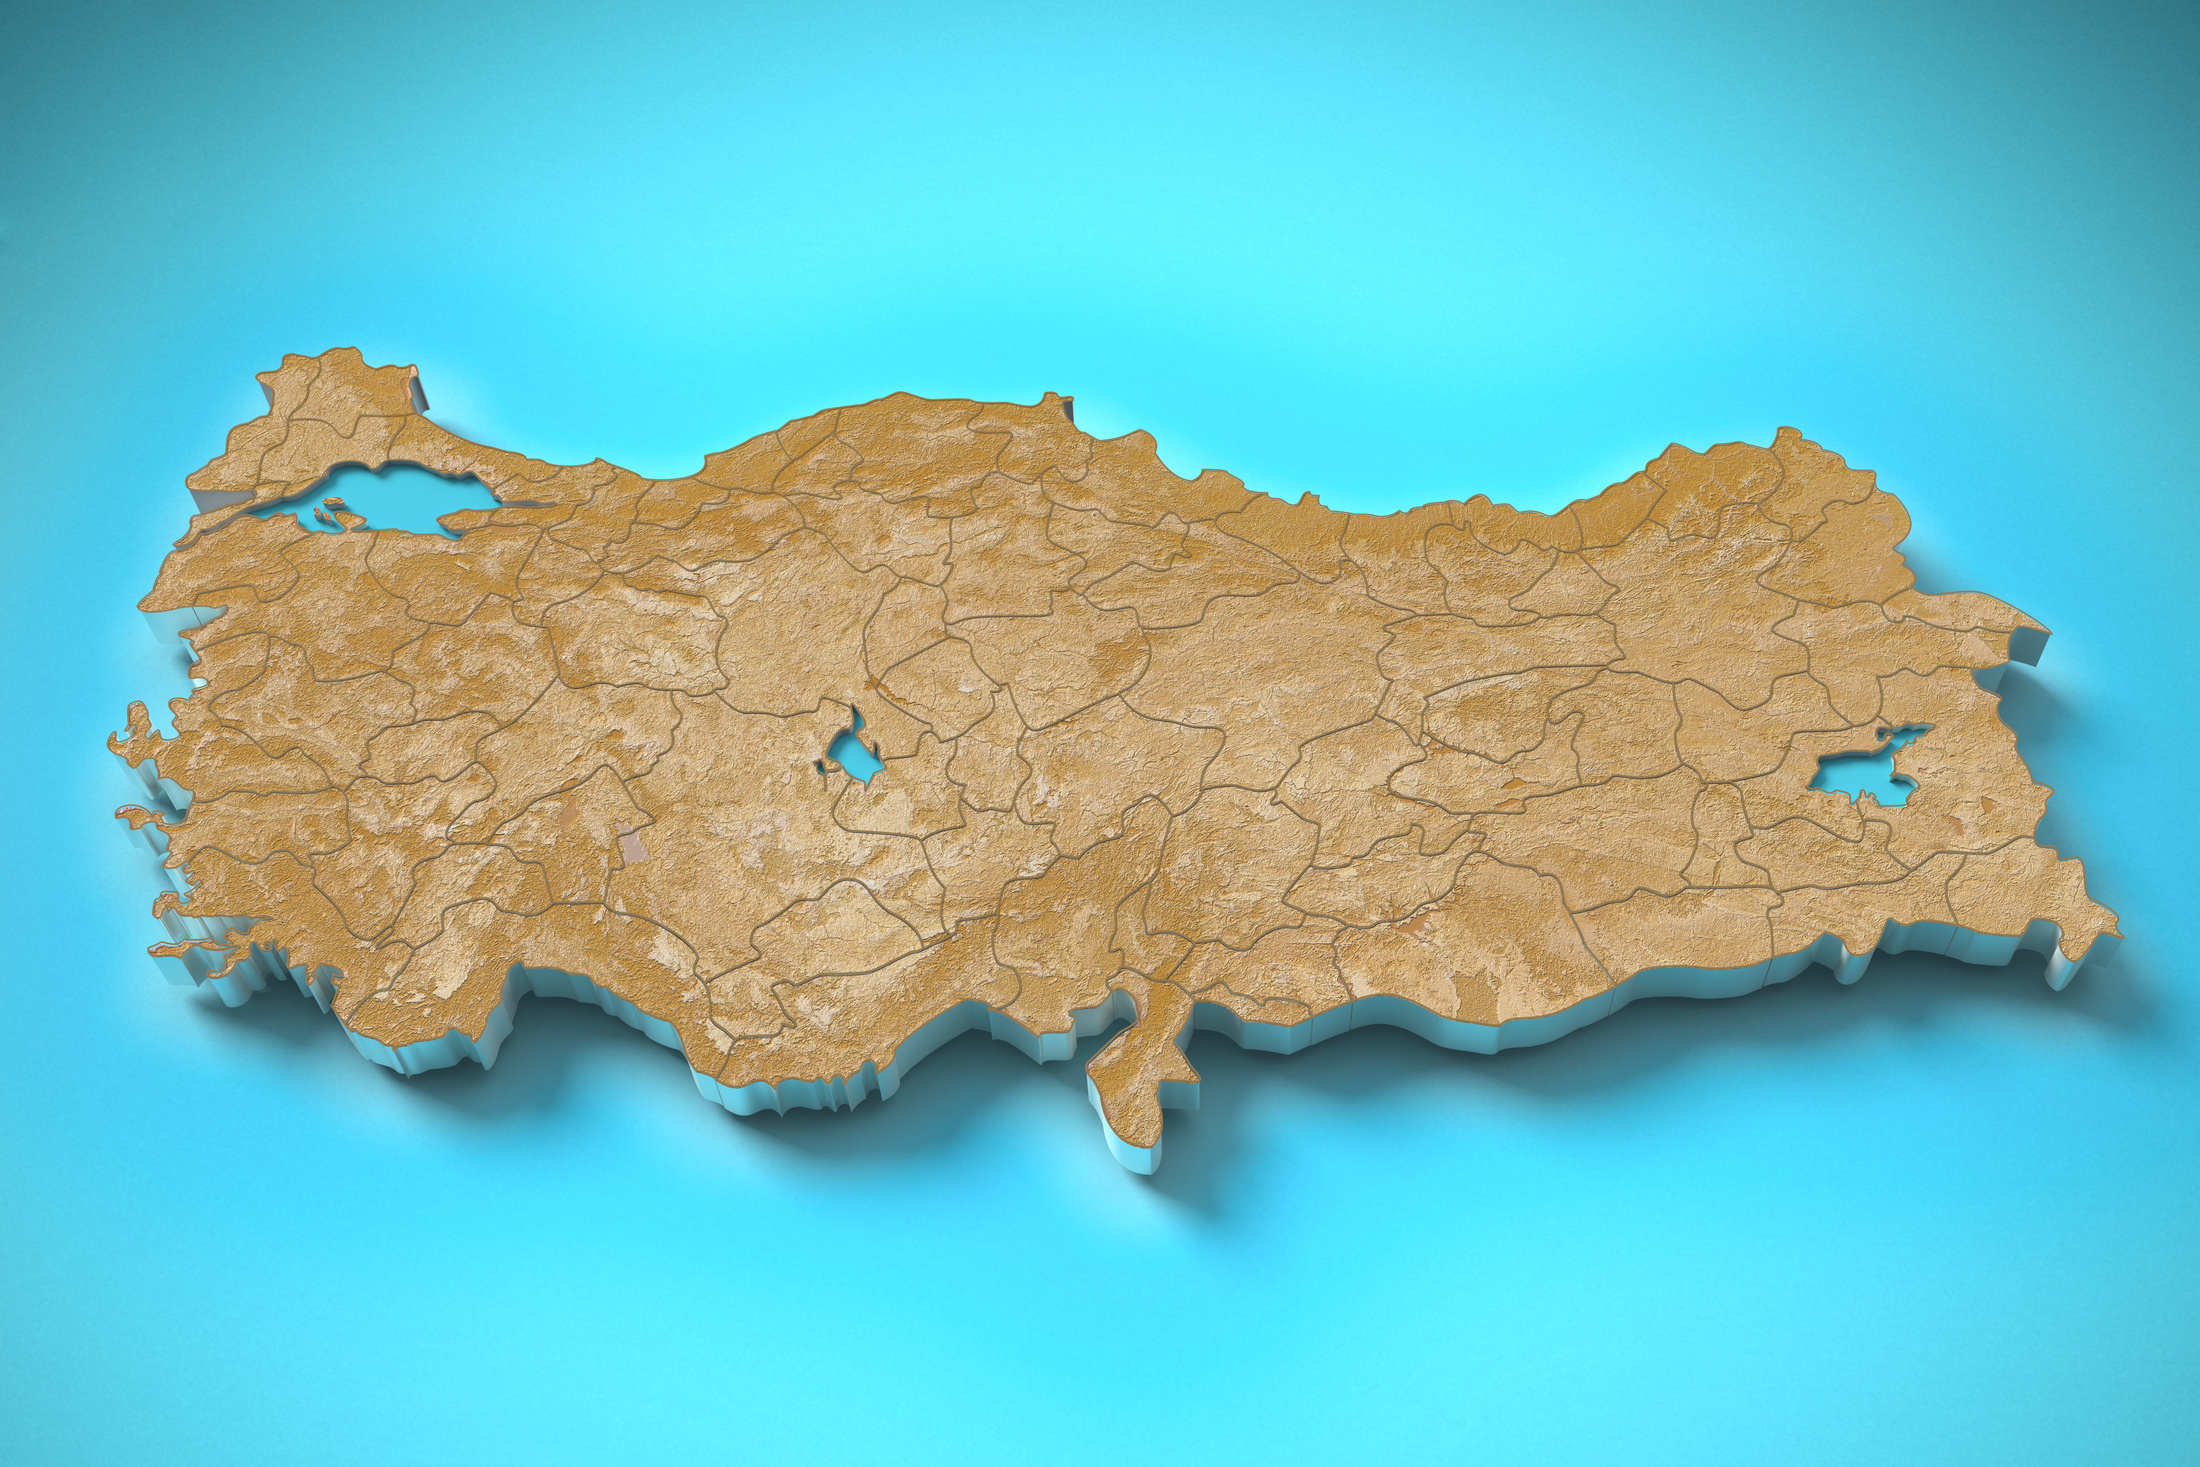 Turkey topography map